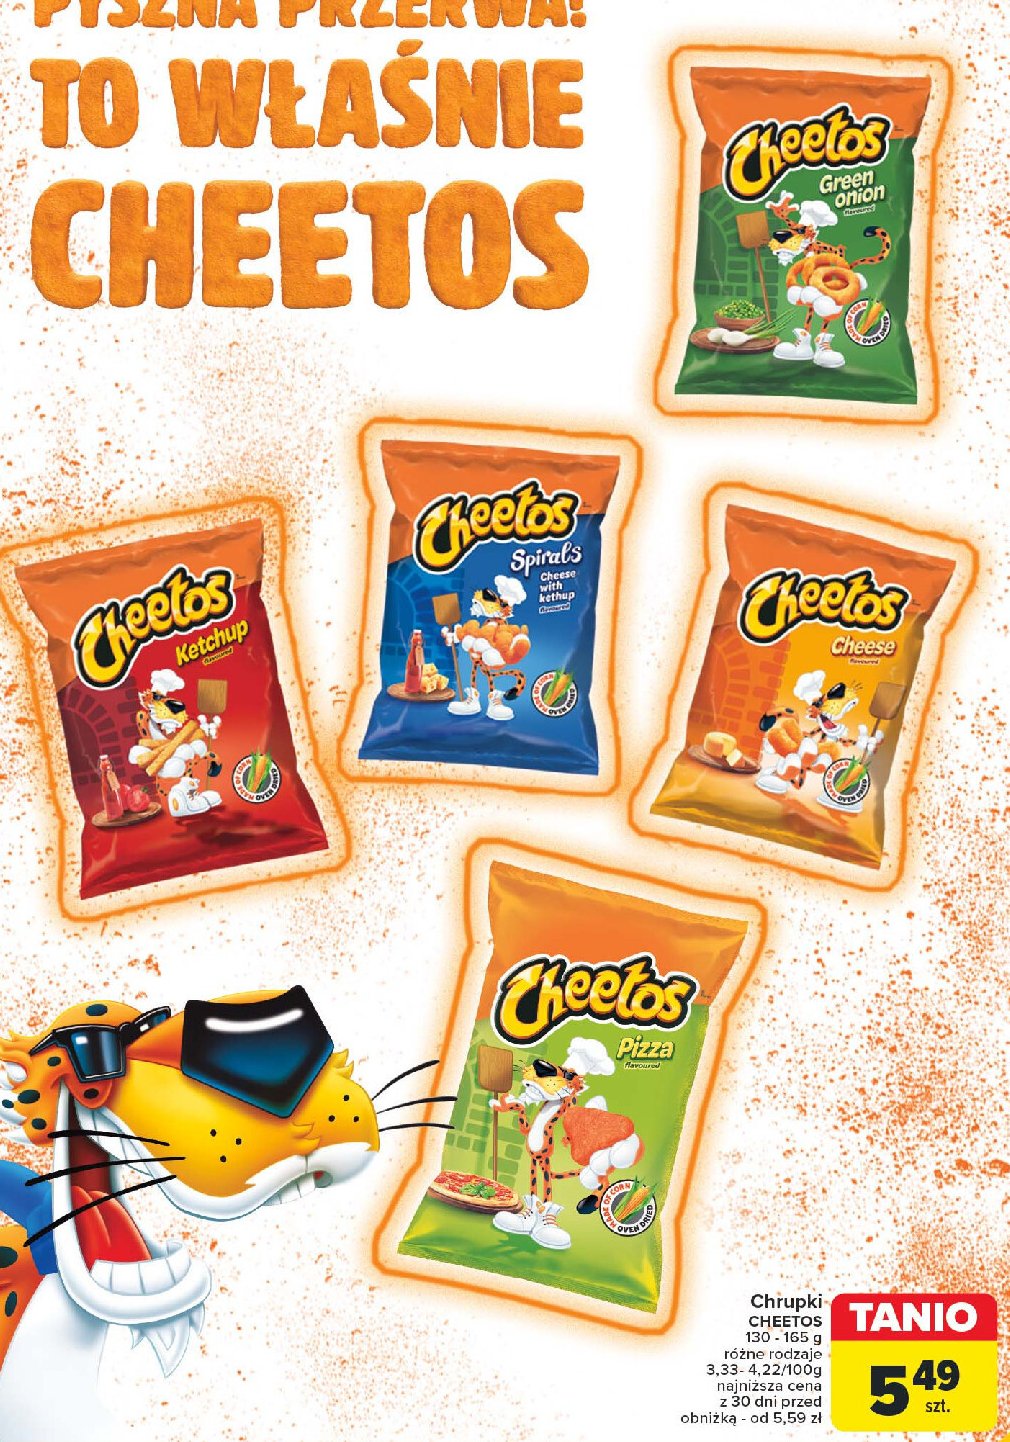 Chrupki zielona cebulka Cheetos promocja